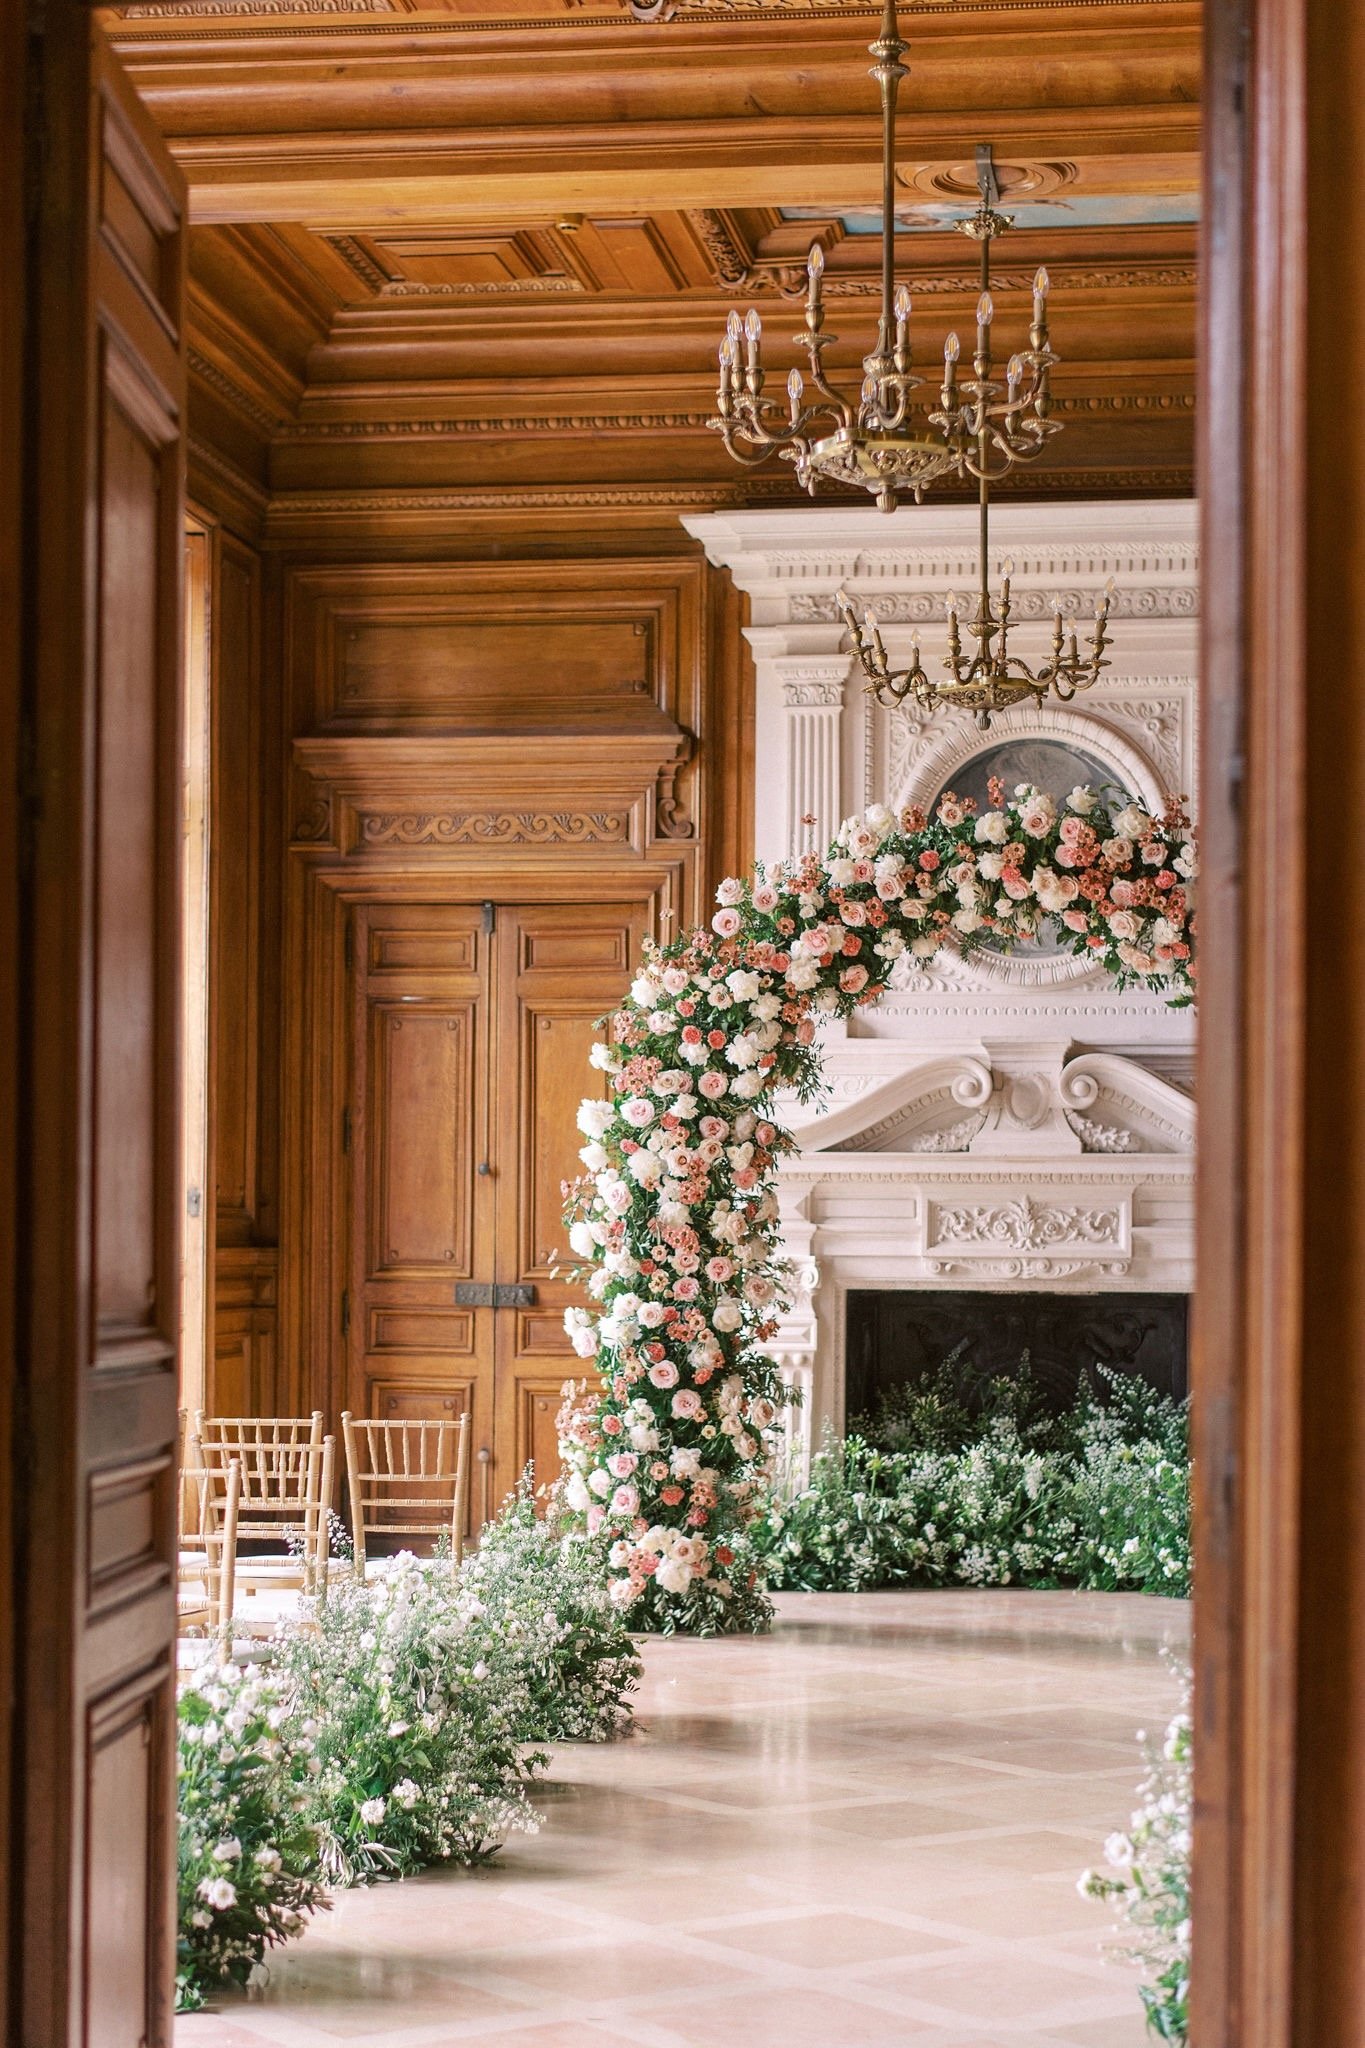 Floresie_luxury_wedding_florist_france_Lyon - 3.jpeg